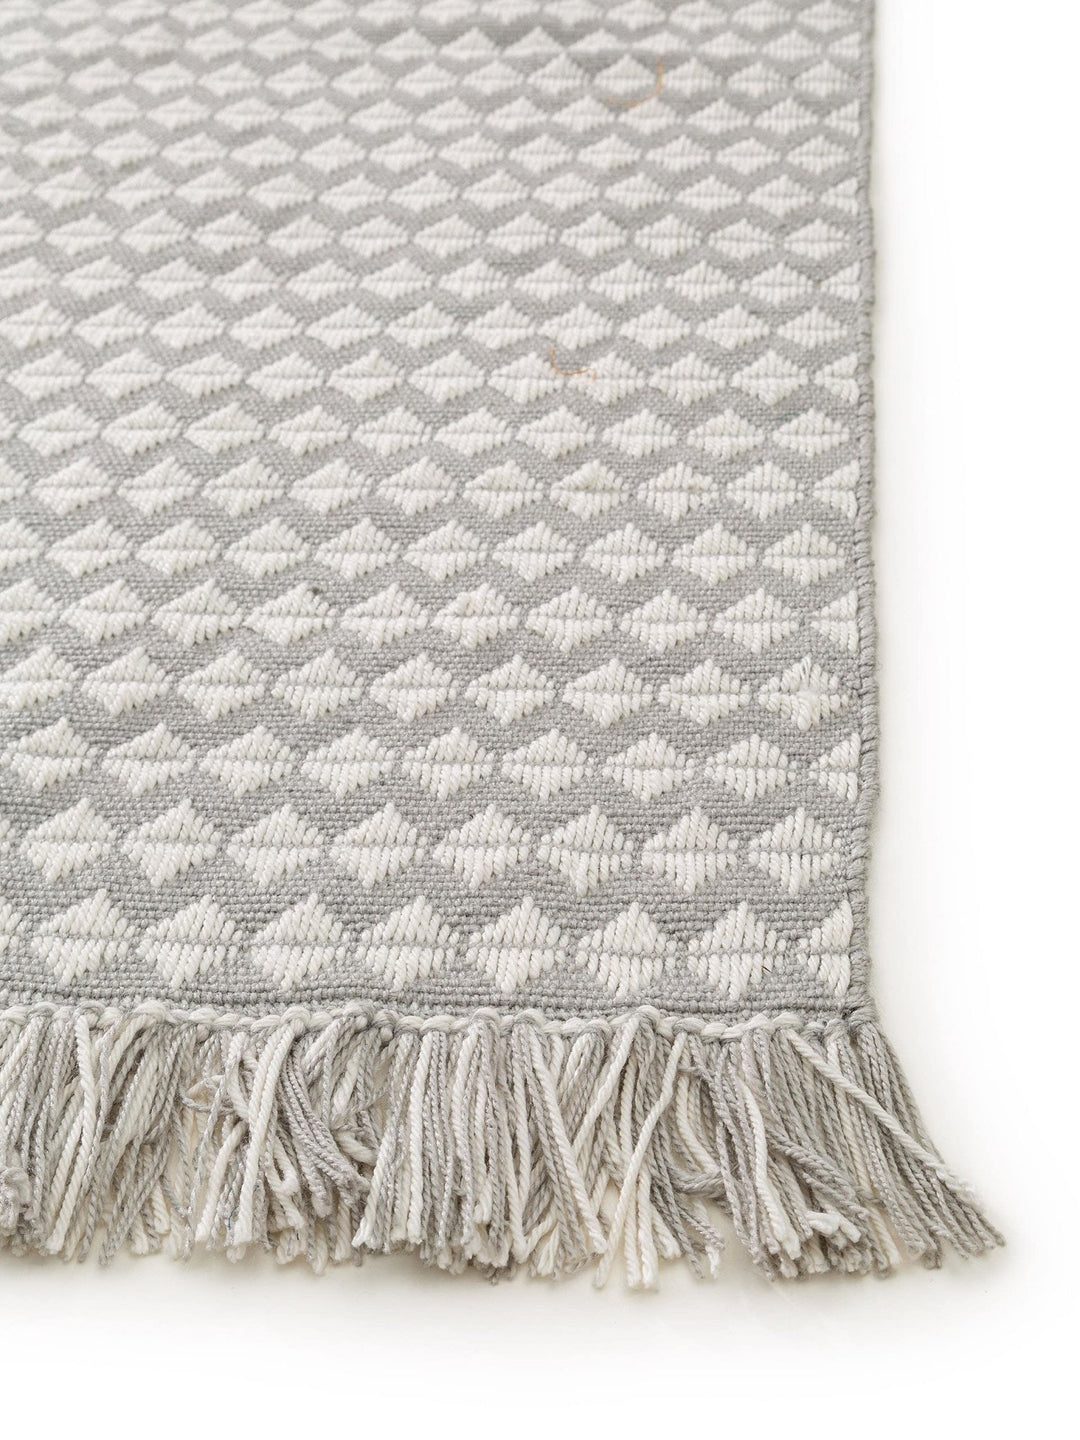 Teppich aus recyceltem Material Morty Grau - benuta PLUS - RugDreams®